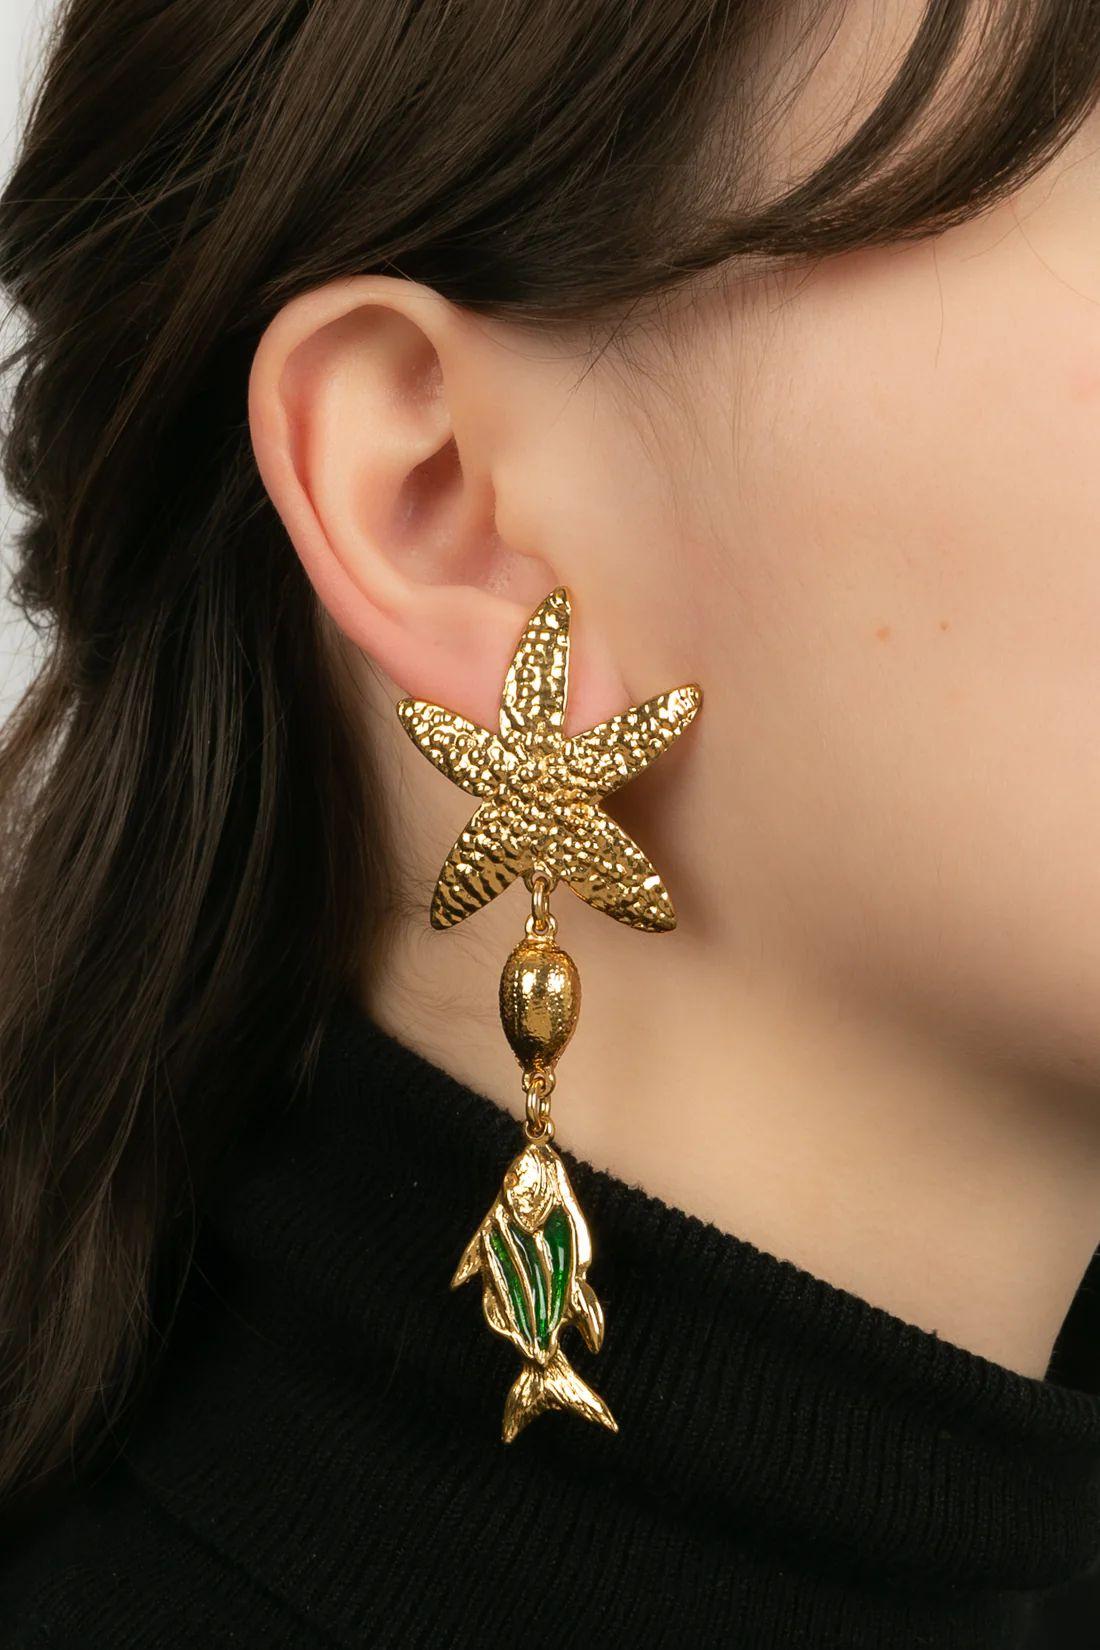 Yves Saint Laurent Earrings in Gold Metal and Green Enamel For Sale 2